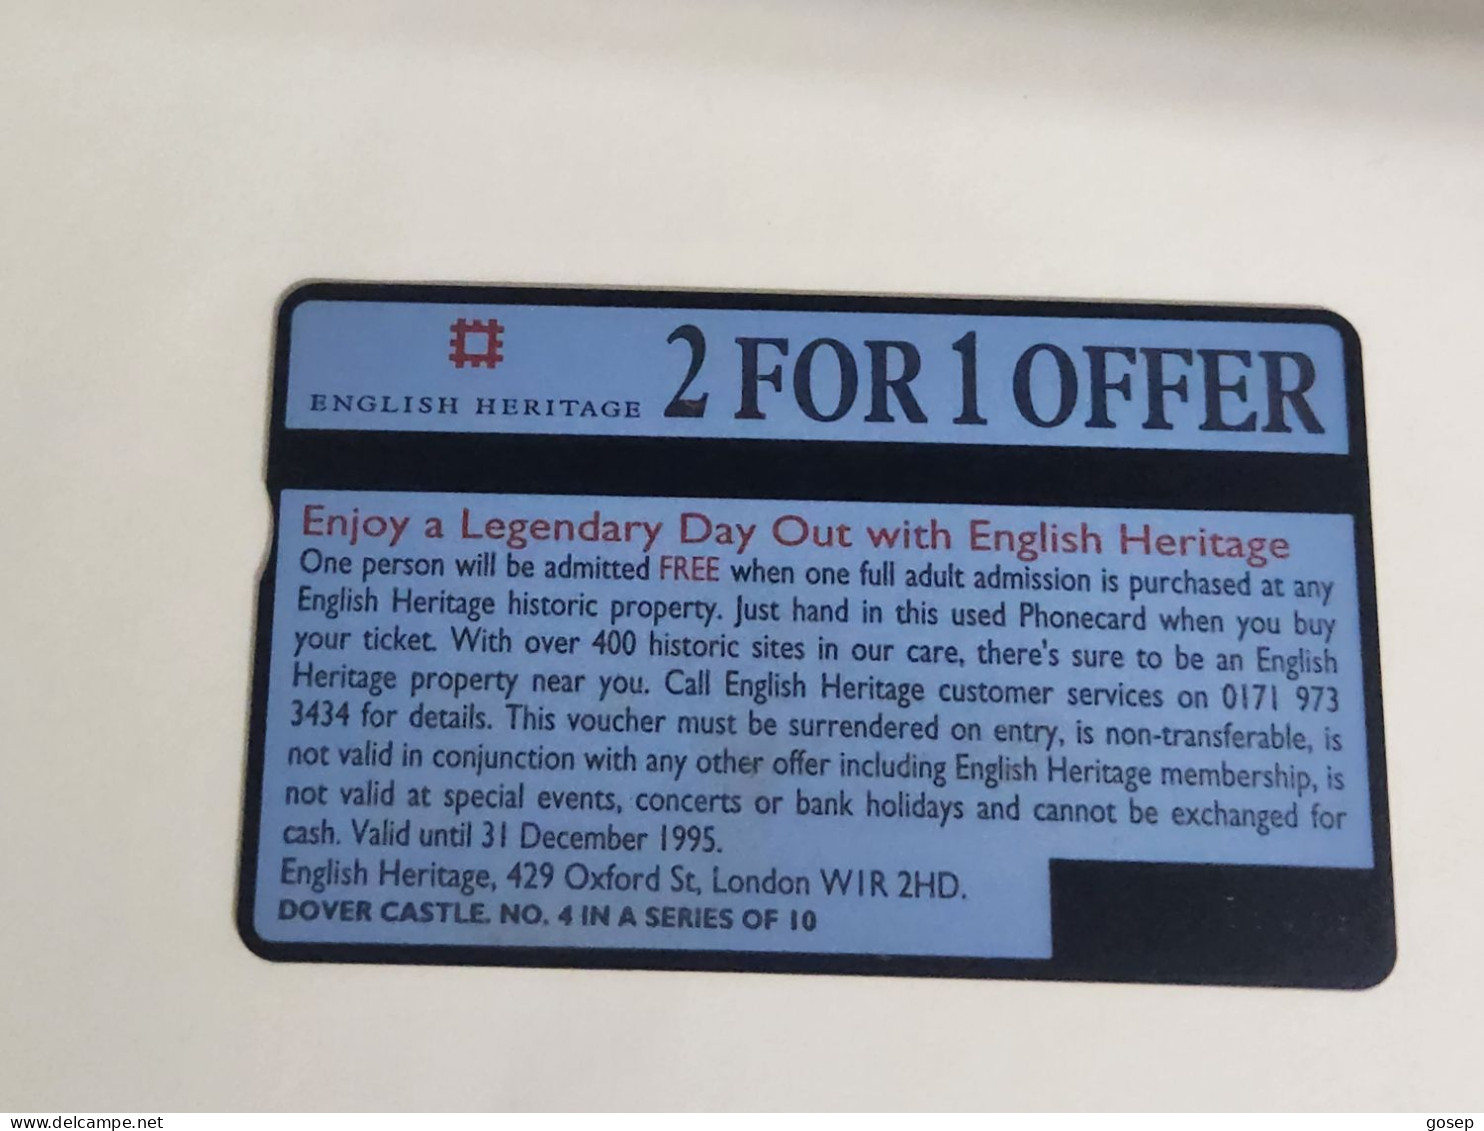 United Kingdom-(BTA116)HERITAGE-Dover Castle-(199)(100units)(577G21046)price Cataloge3.00£-used+1card Prepiad Free - BT Advertising Issues